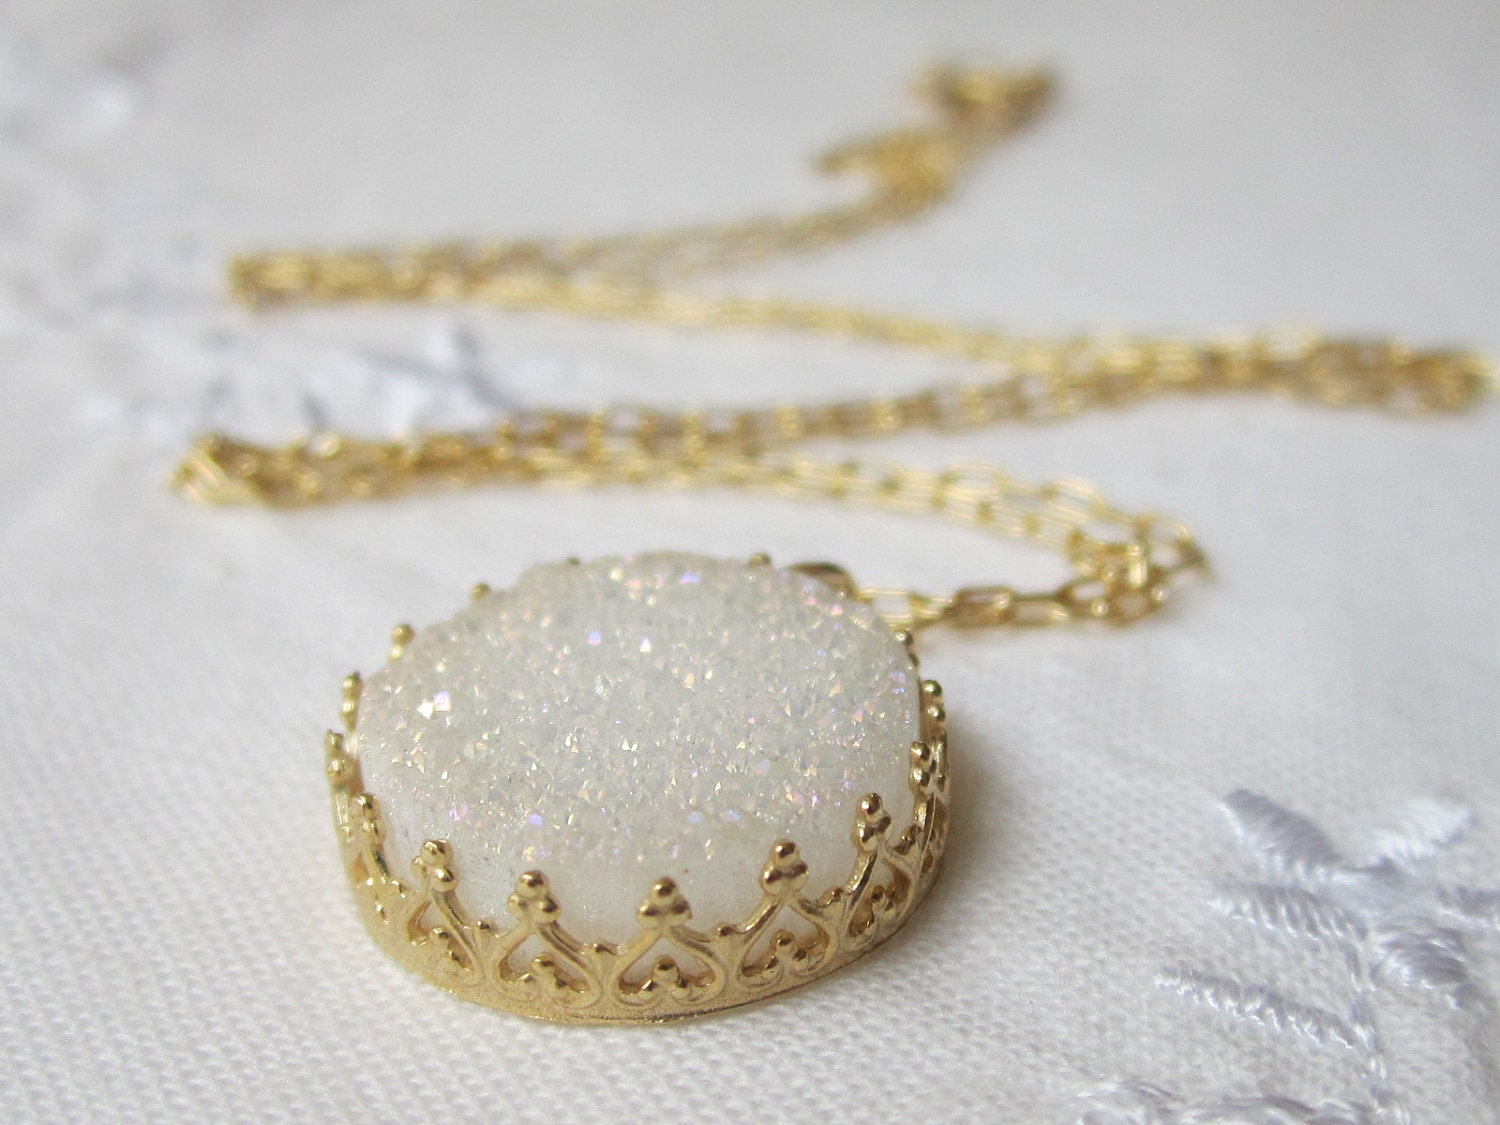 Druzy necklace, 14k gold filled necklace, White druzy quartz necklace, 14 mm round stone, Vintage necklace, Bridal necklace